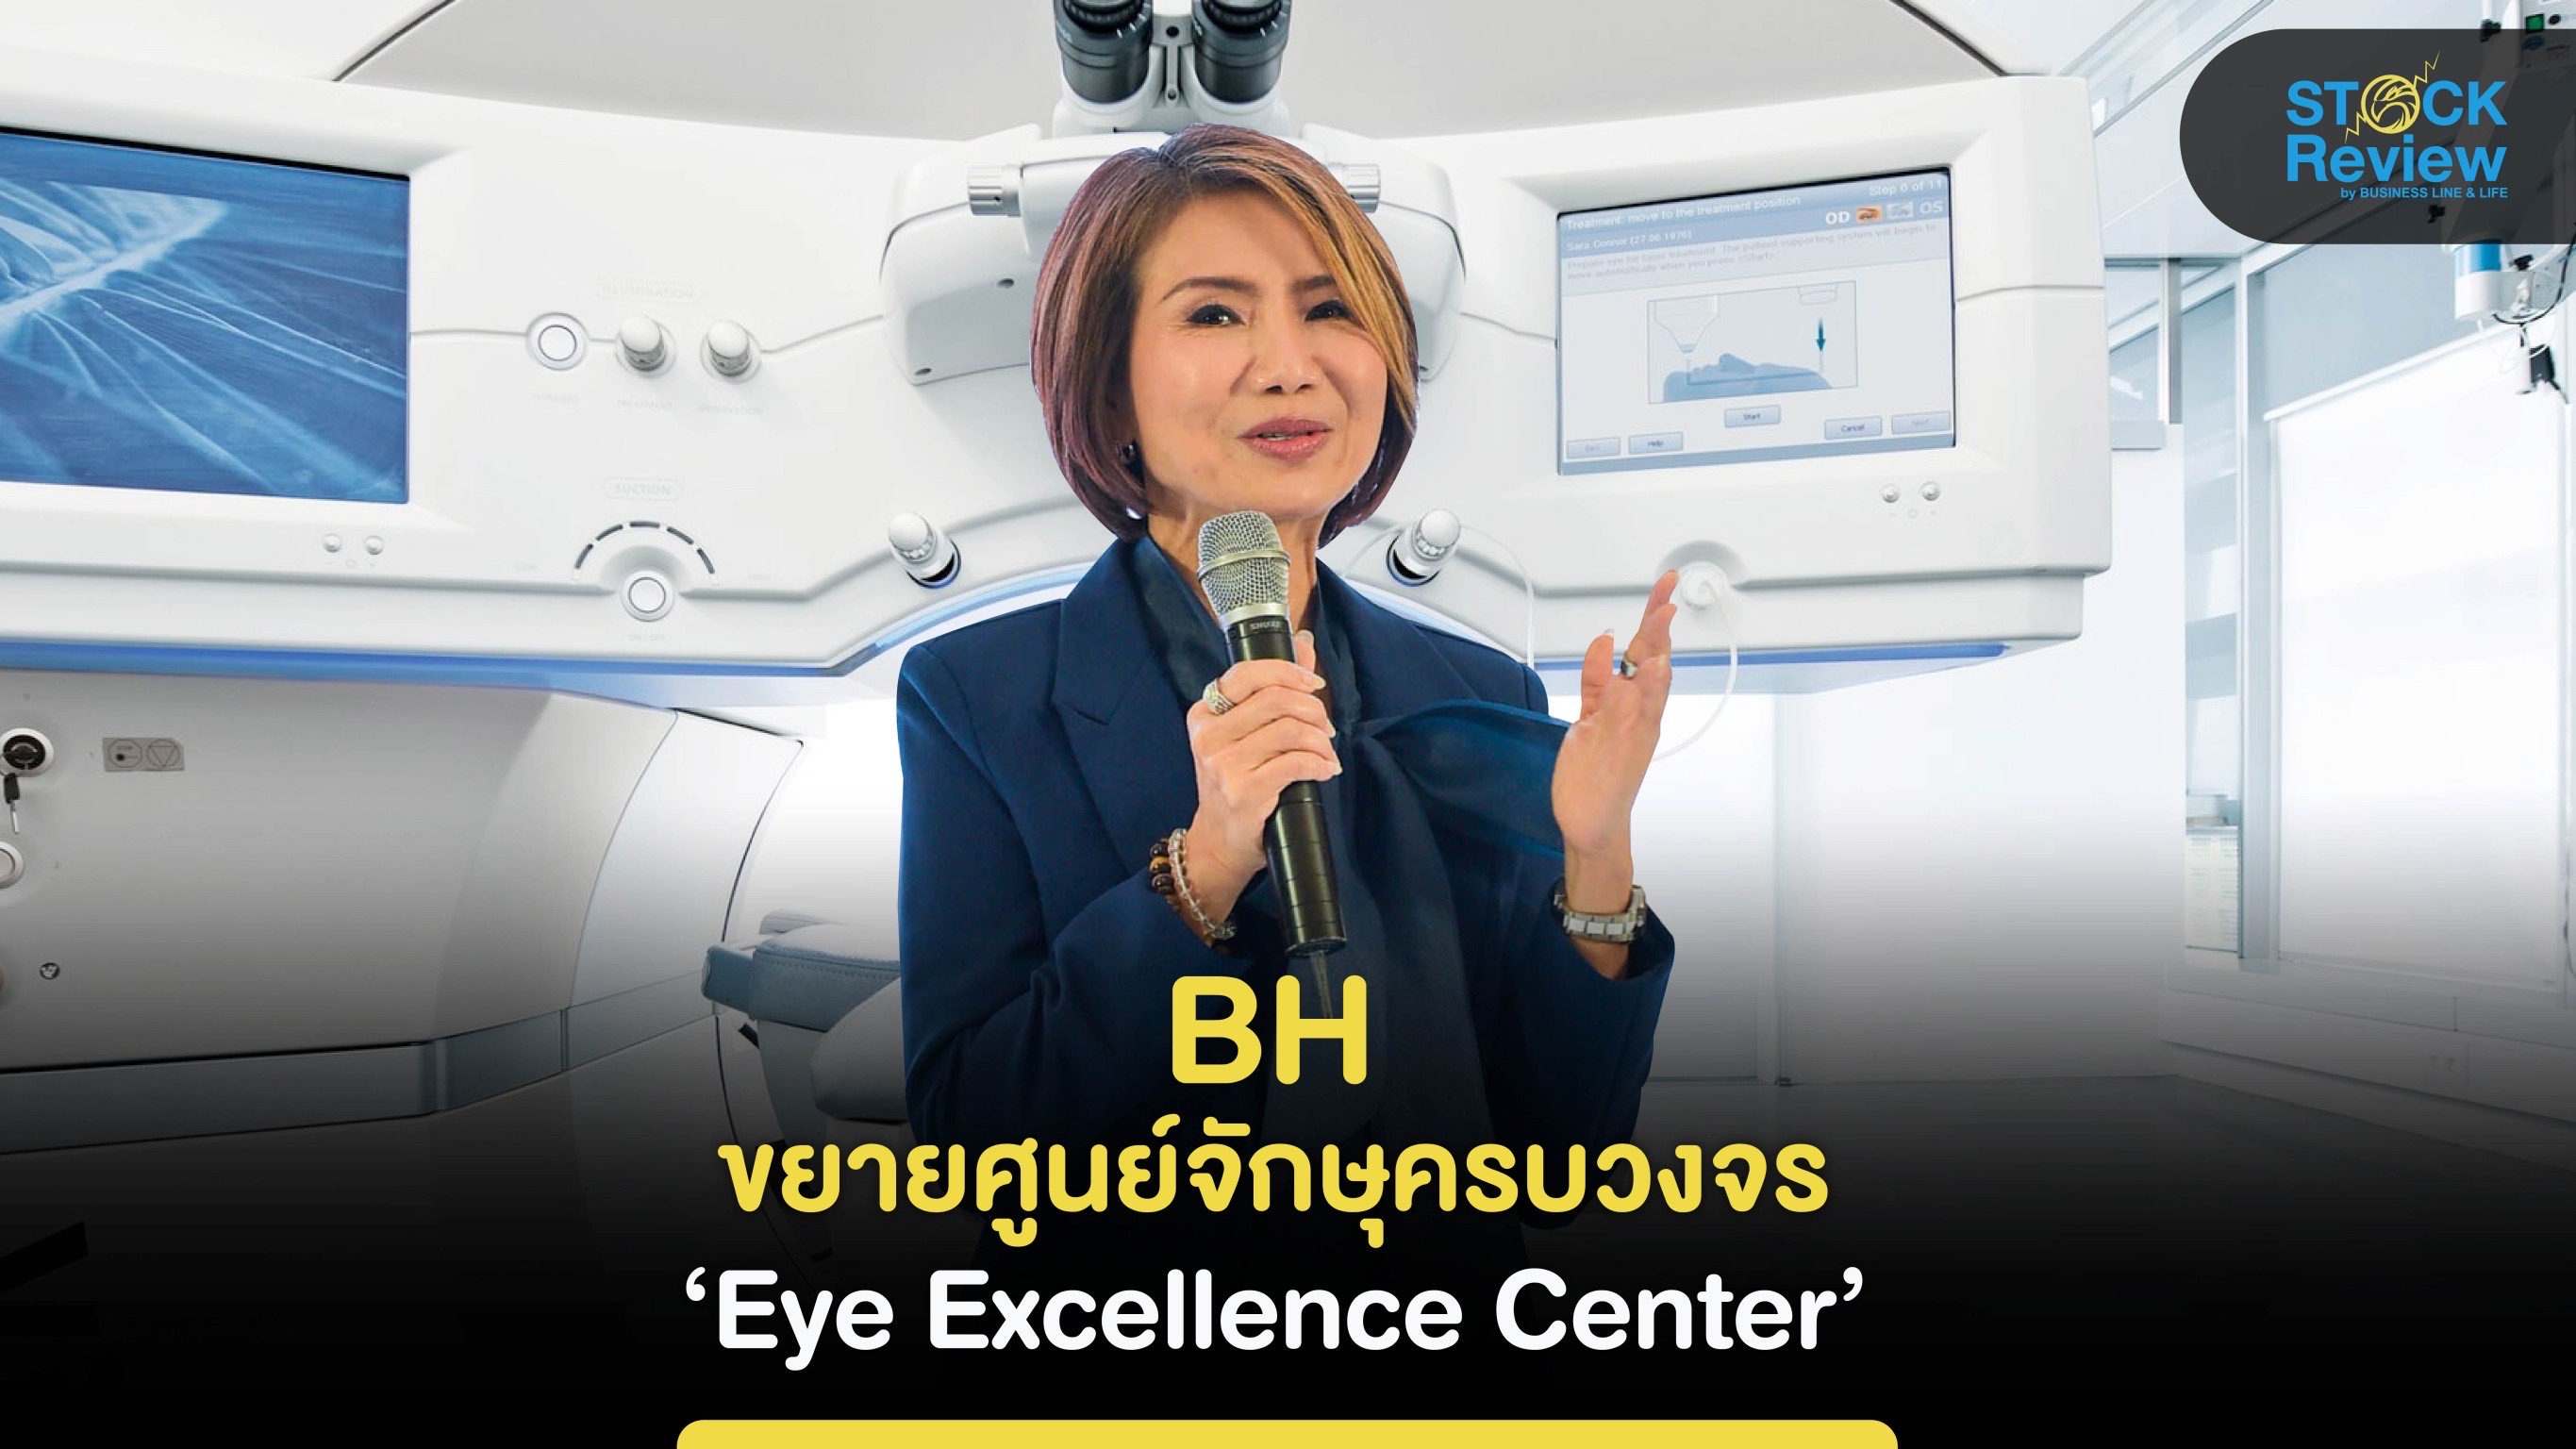 BH ขยายศูนย์จักษุครบวงจร “ Eye Excellence Center”